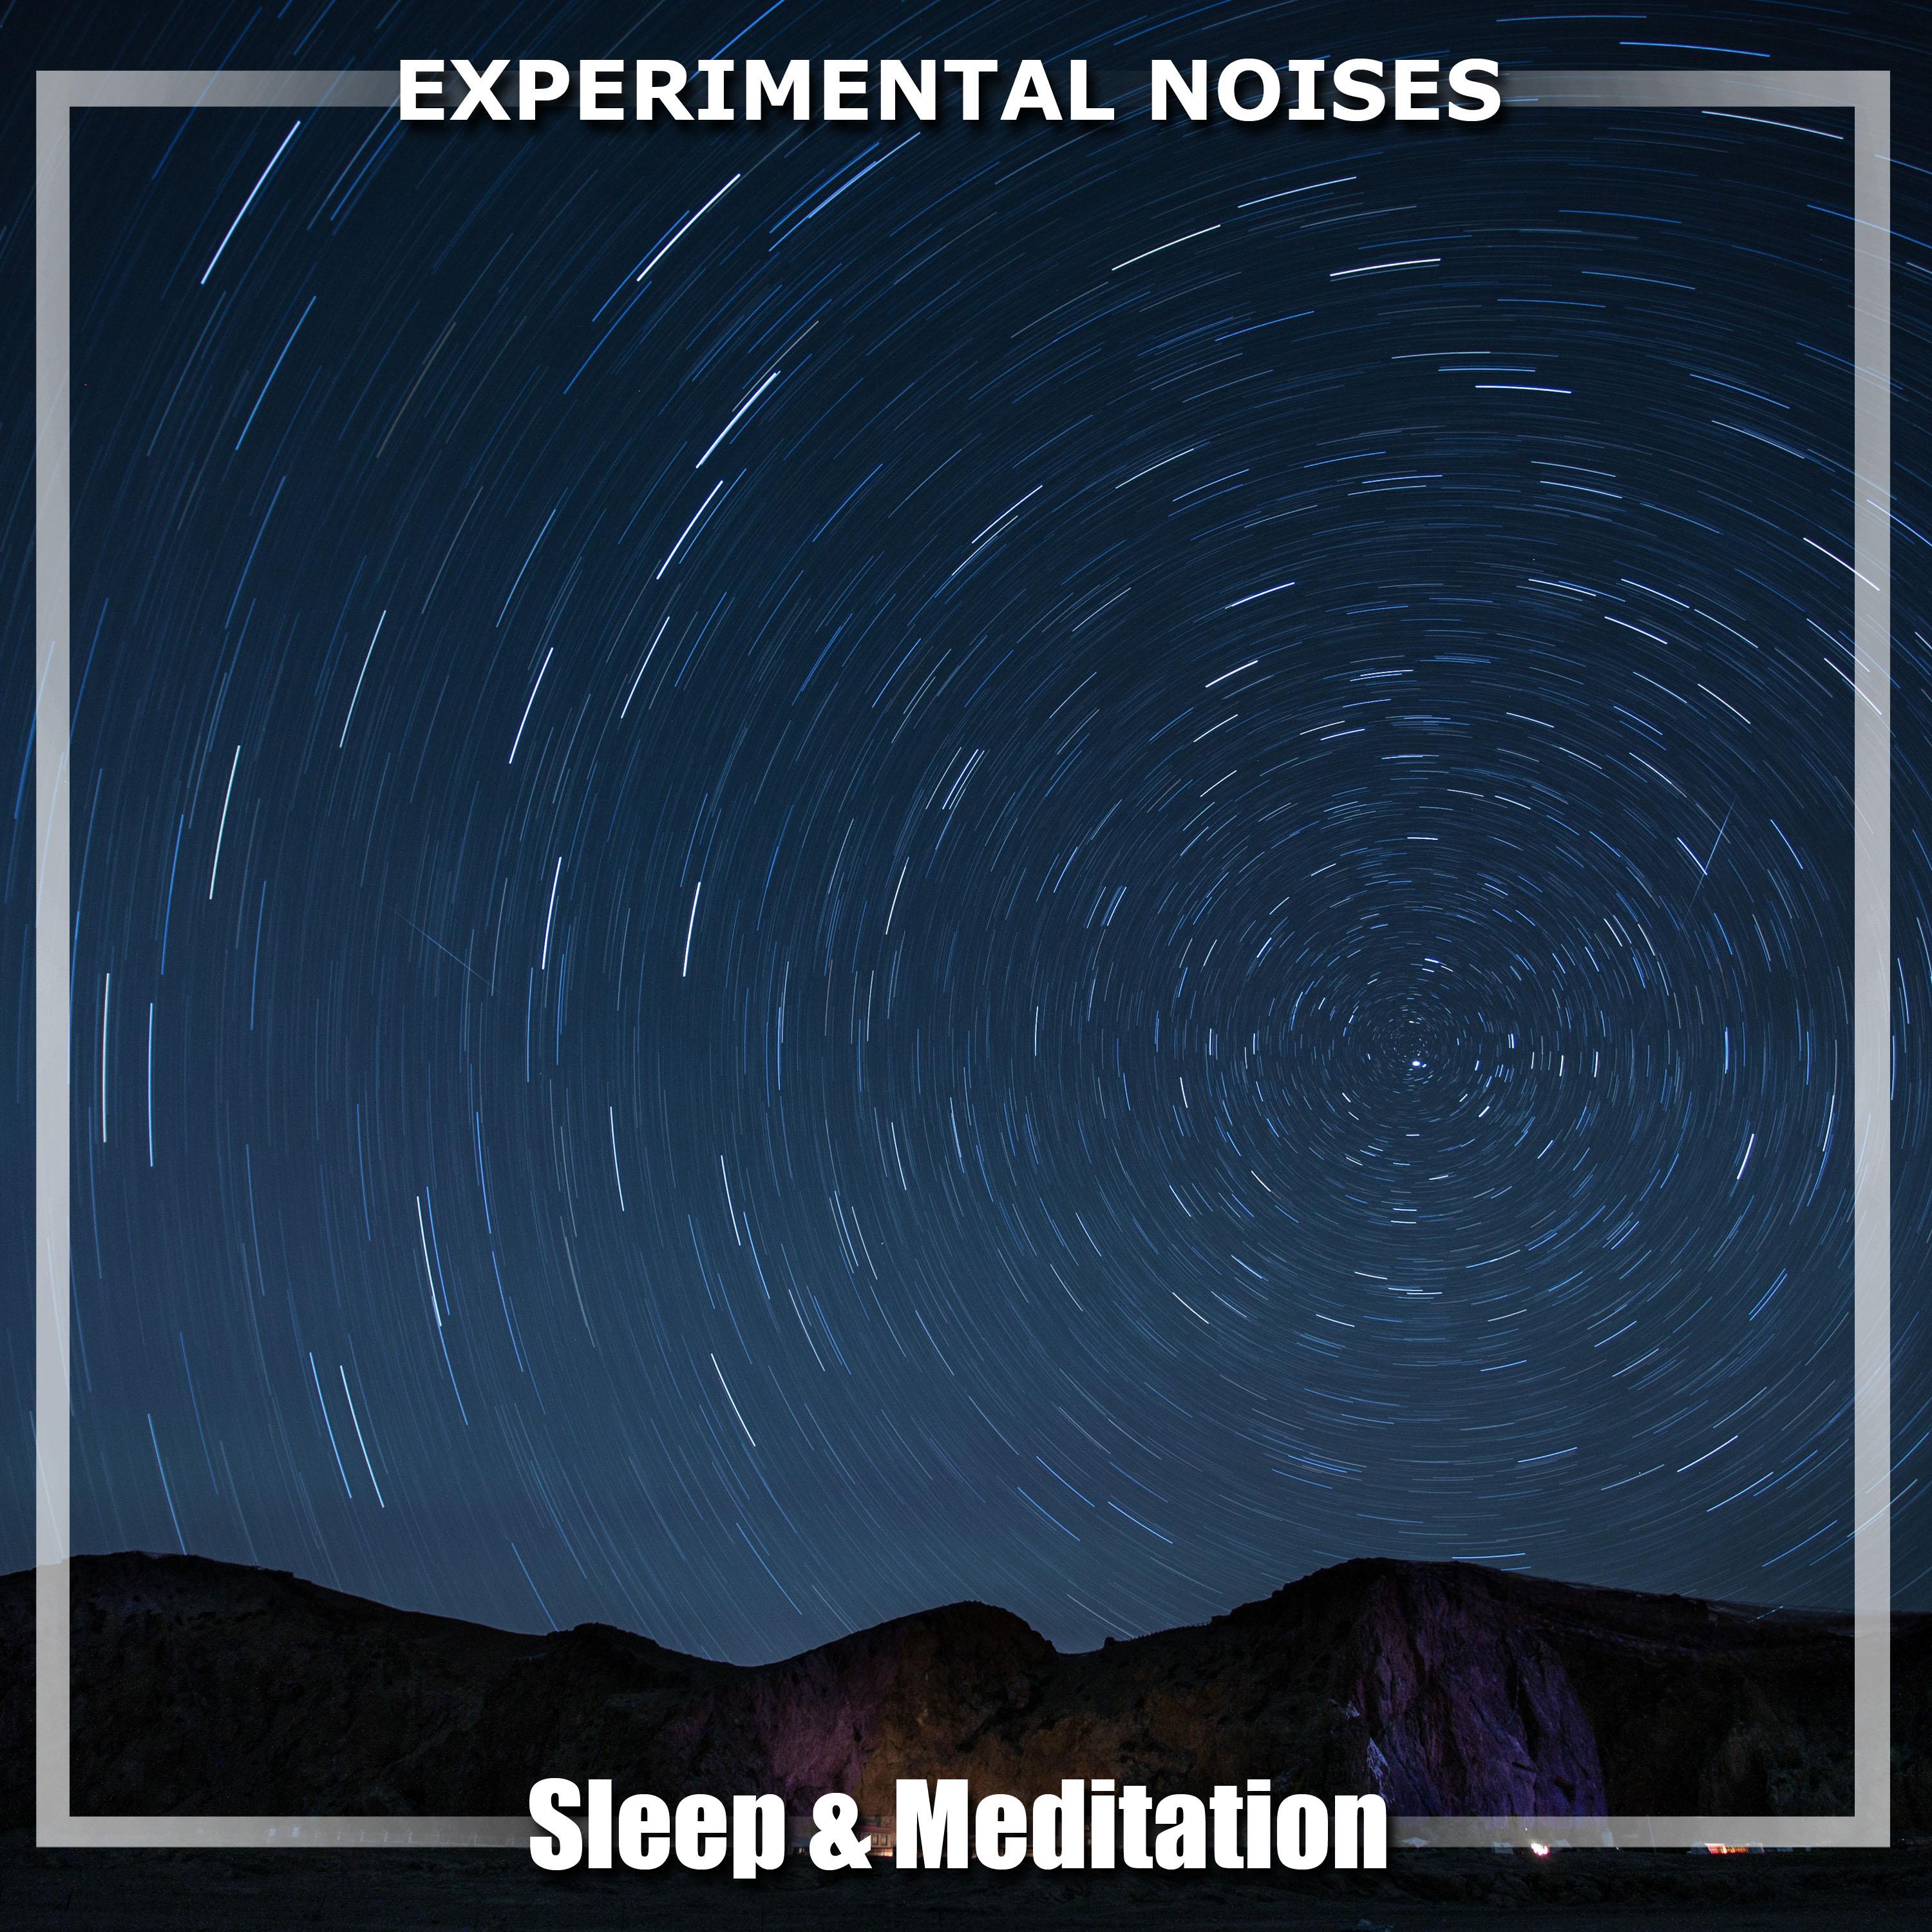 13 Experimental Noises for Sleeping & Meditation